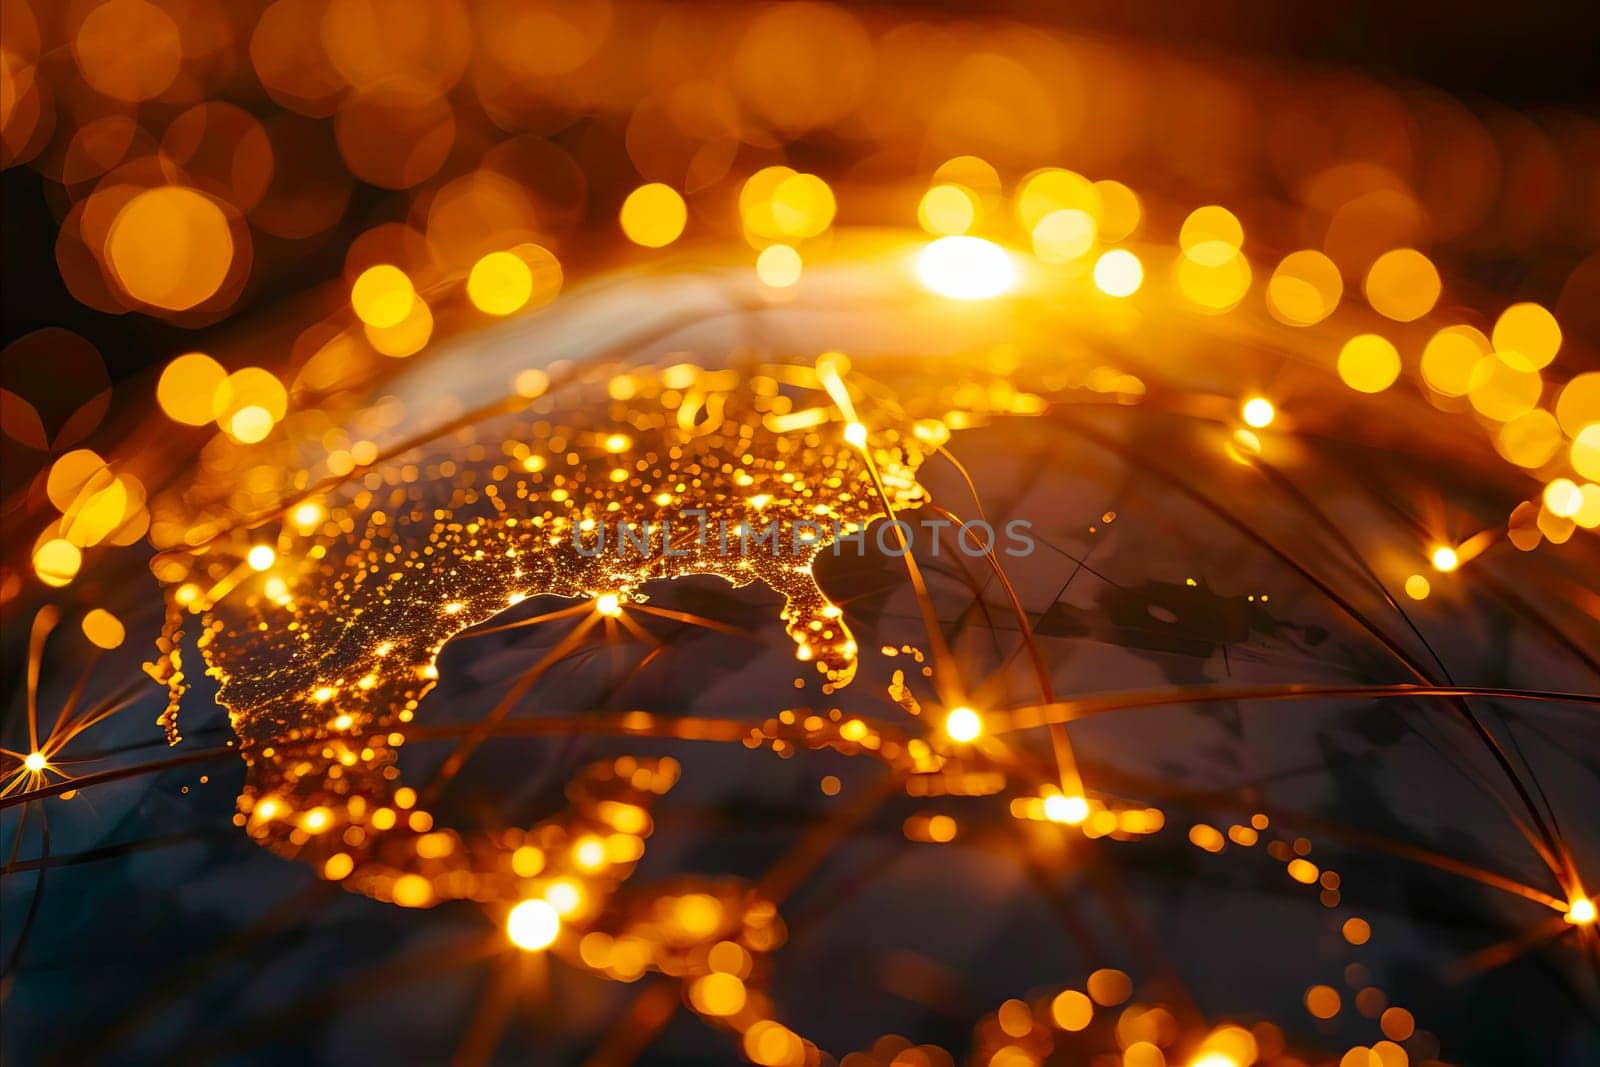 A Shining Globe With a Network Illuminated by Lights. by vladimka